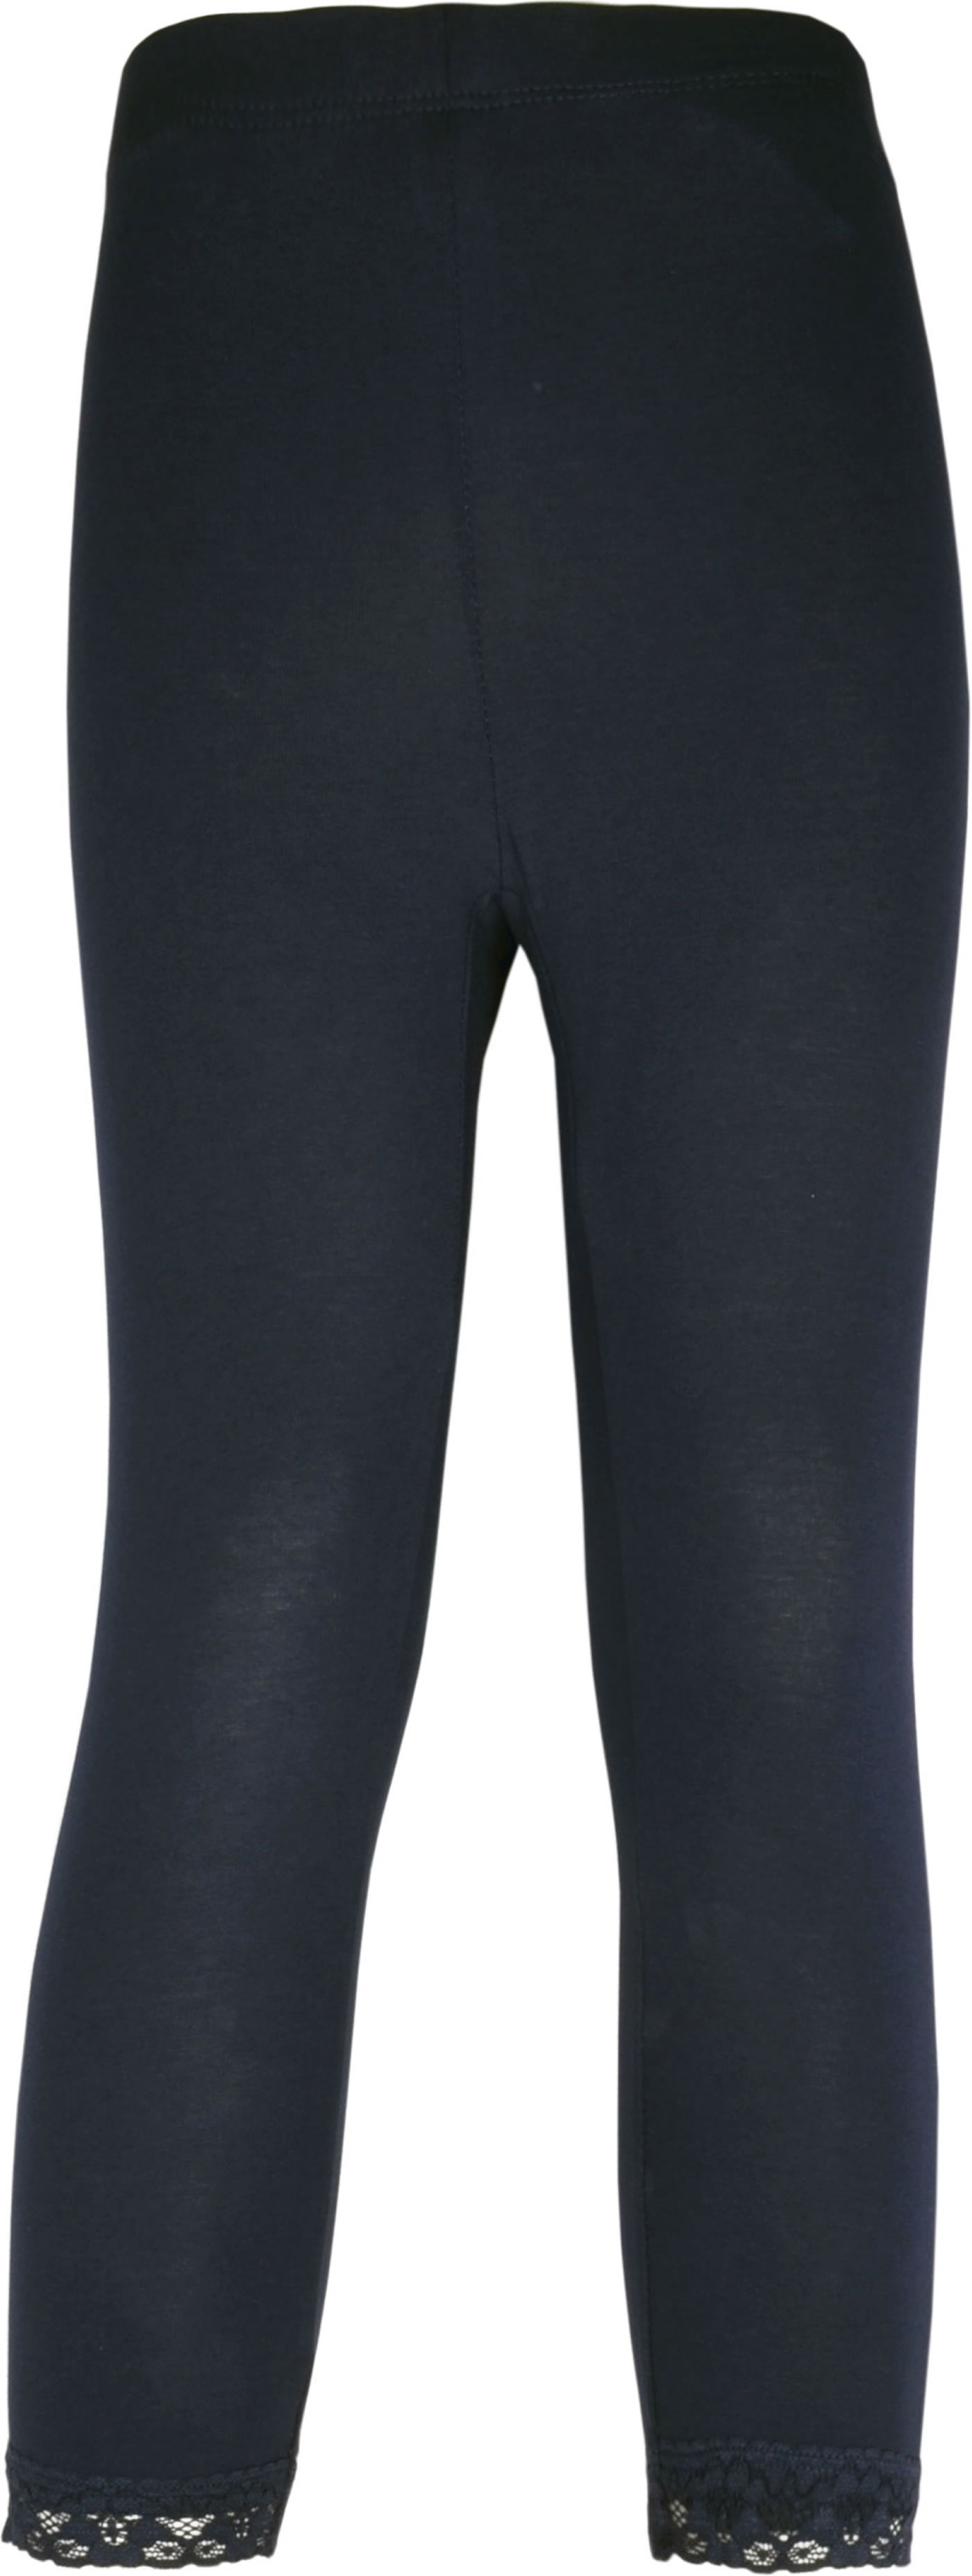 Avia Ladies' Yoga Pant size S Black Pink Trim ankle length